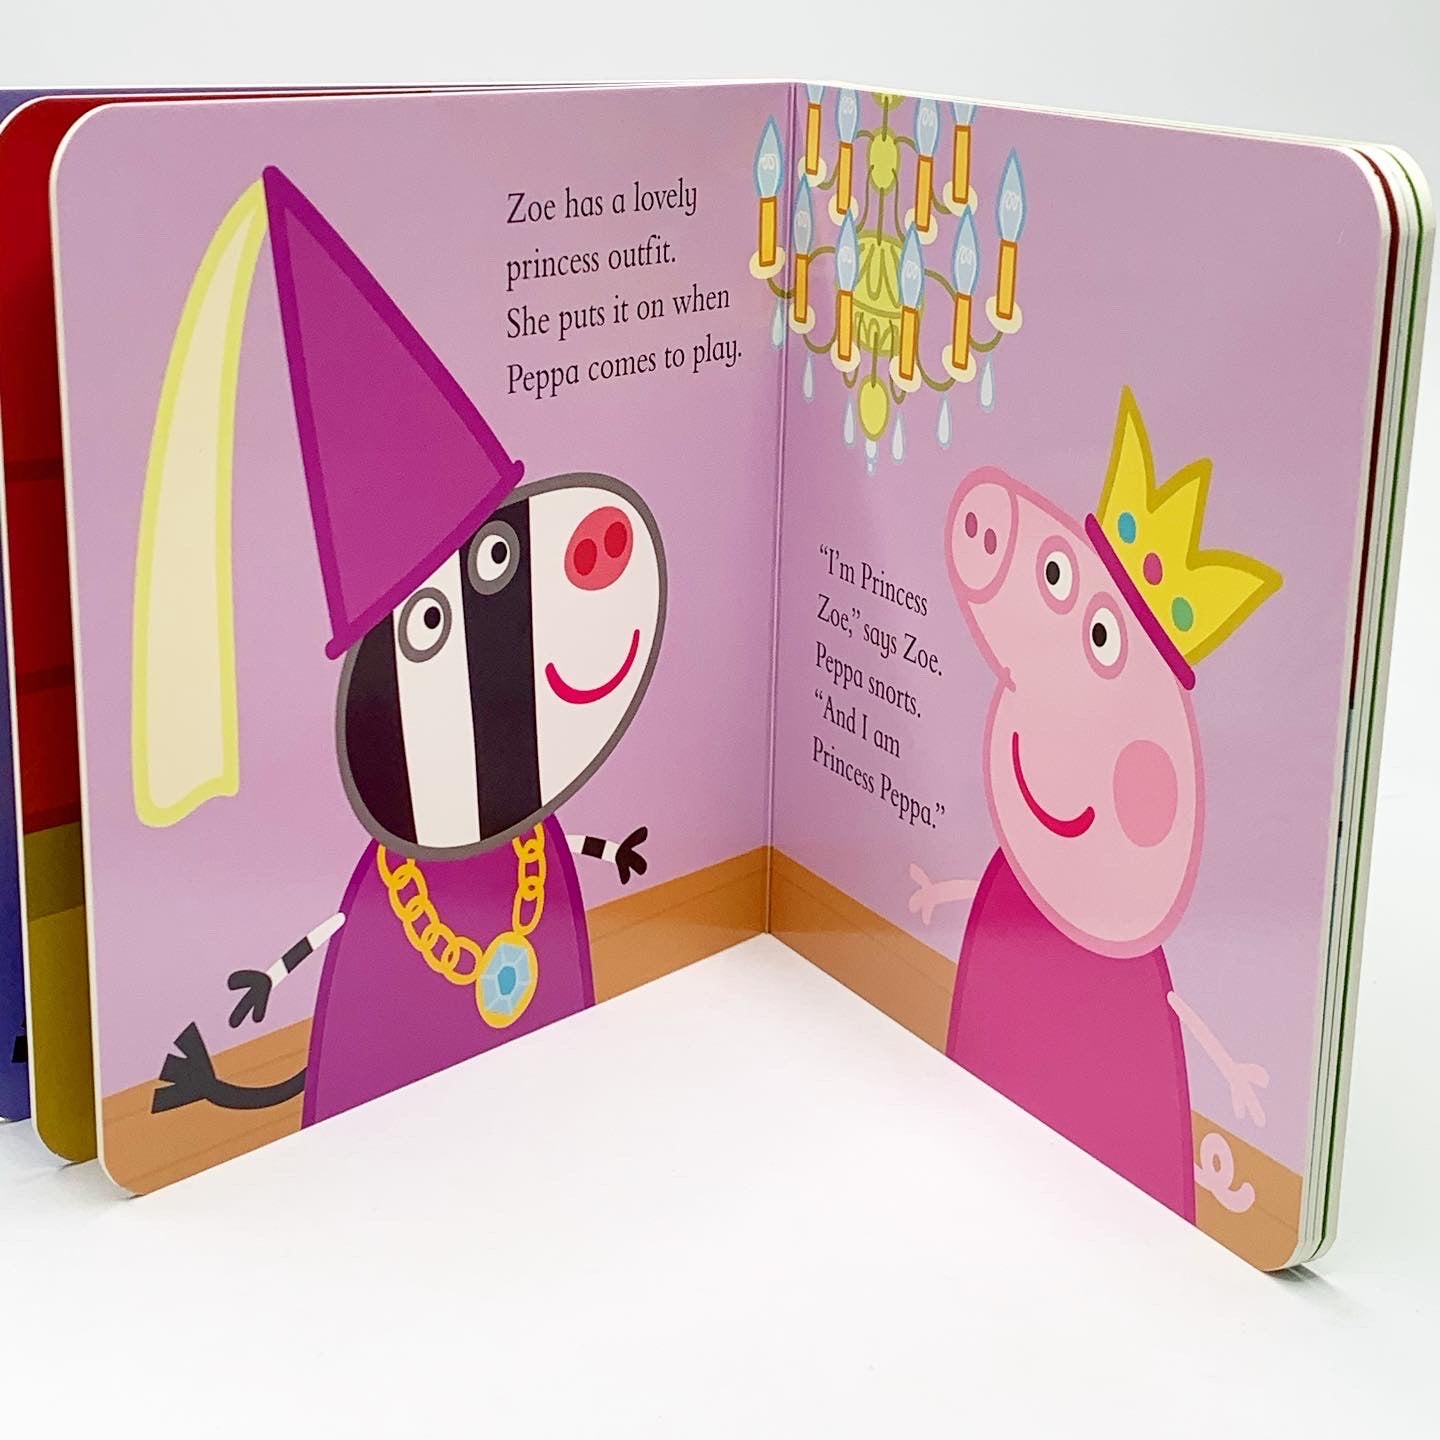 Peppa Pig: Zoe Zebra Mini Board Book – Red Balloon Books